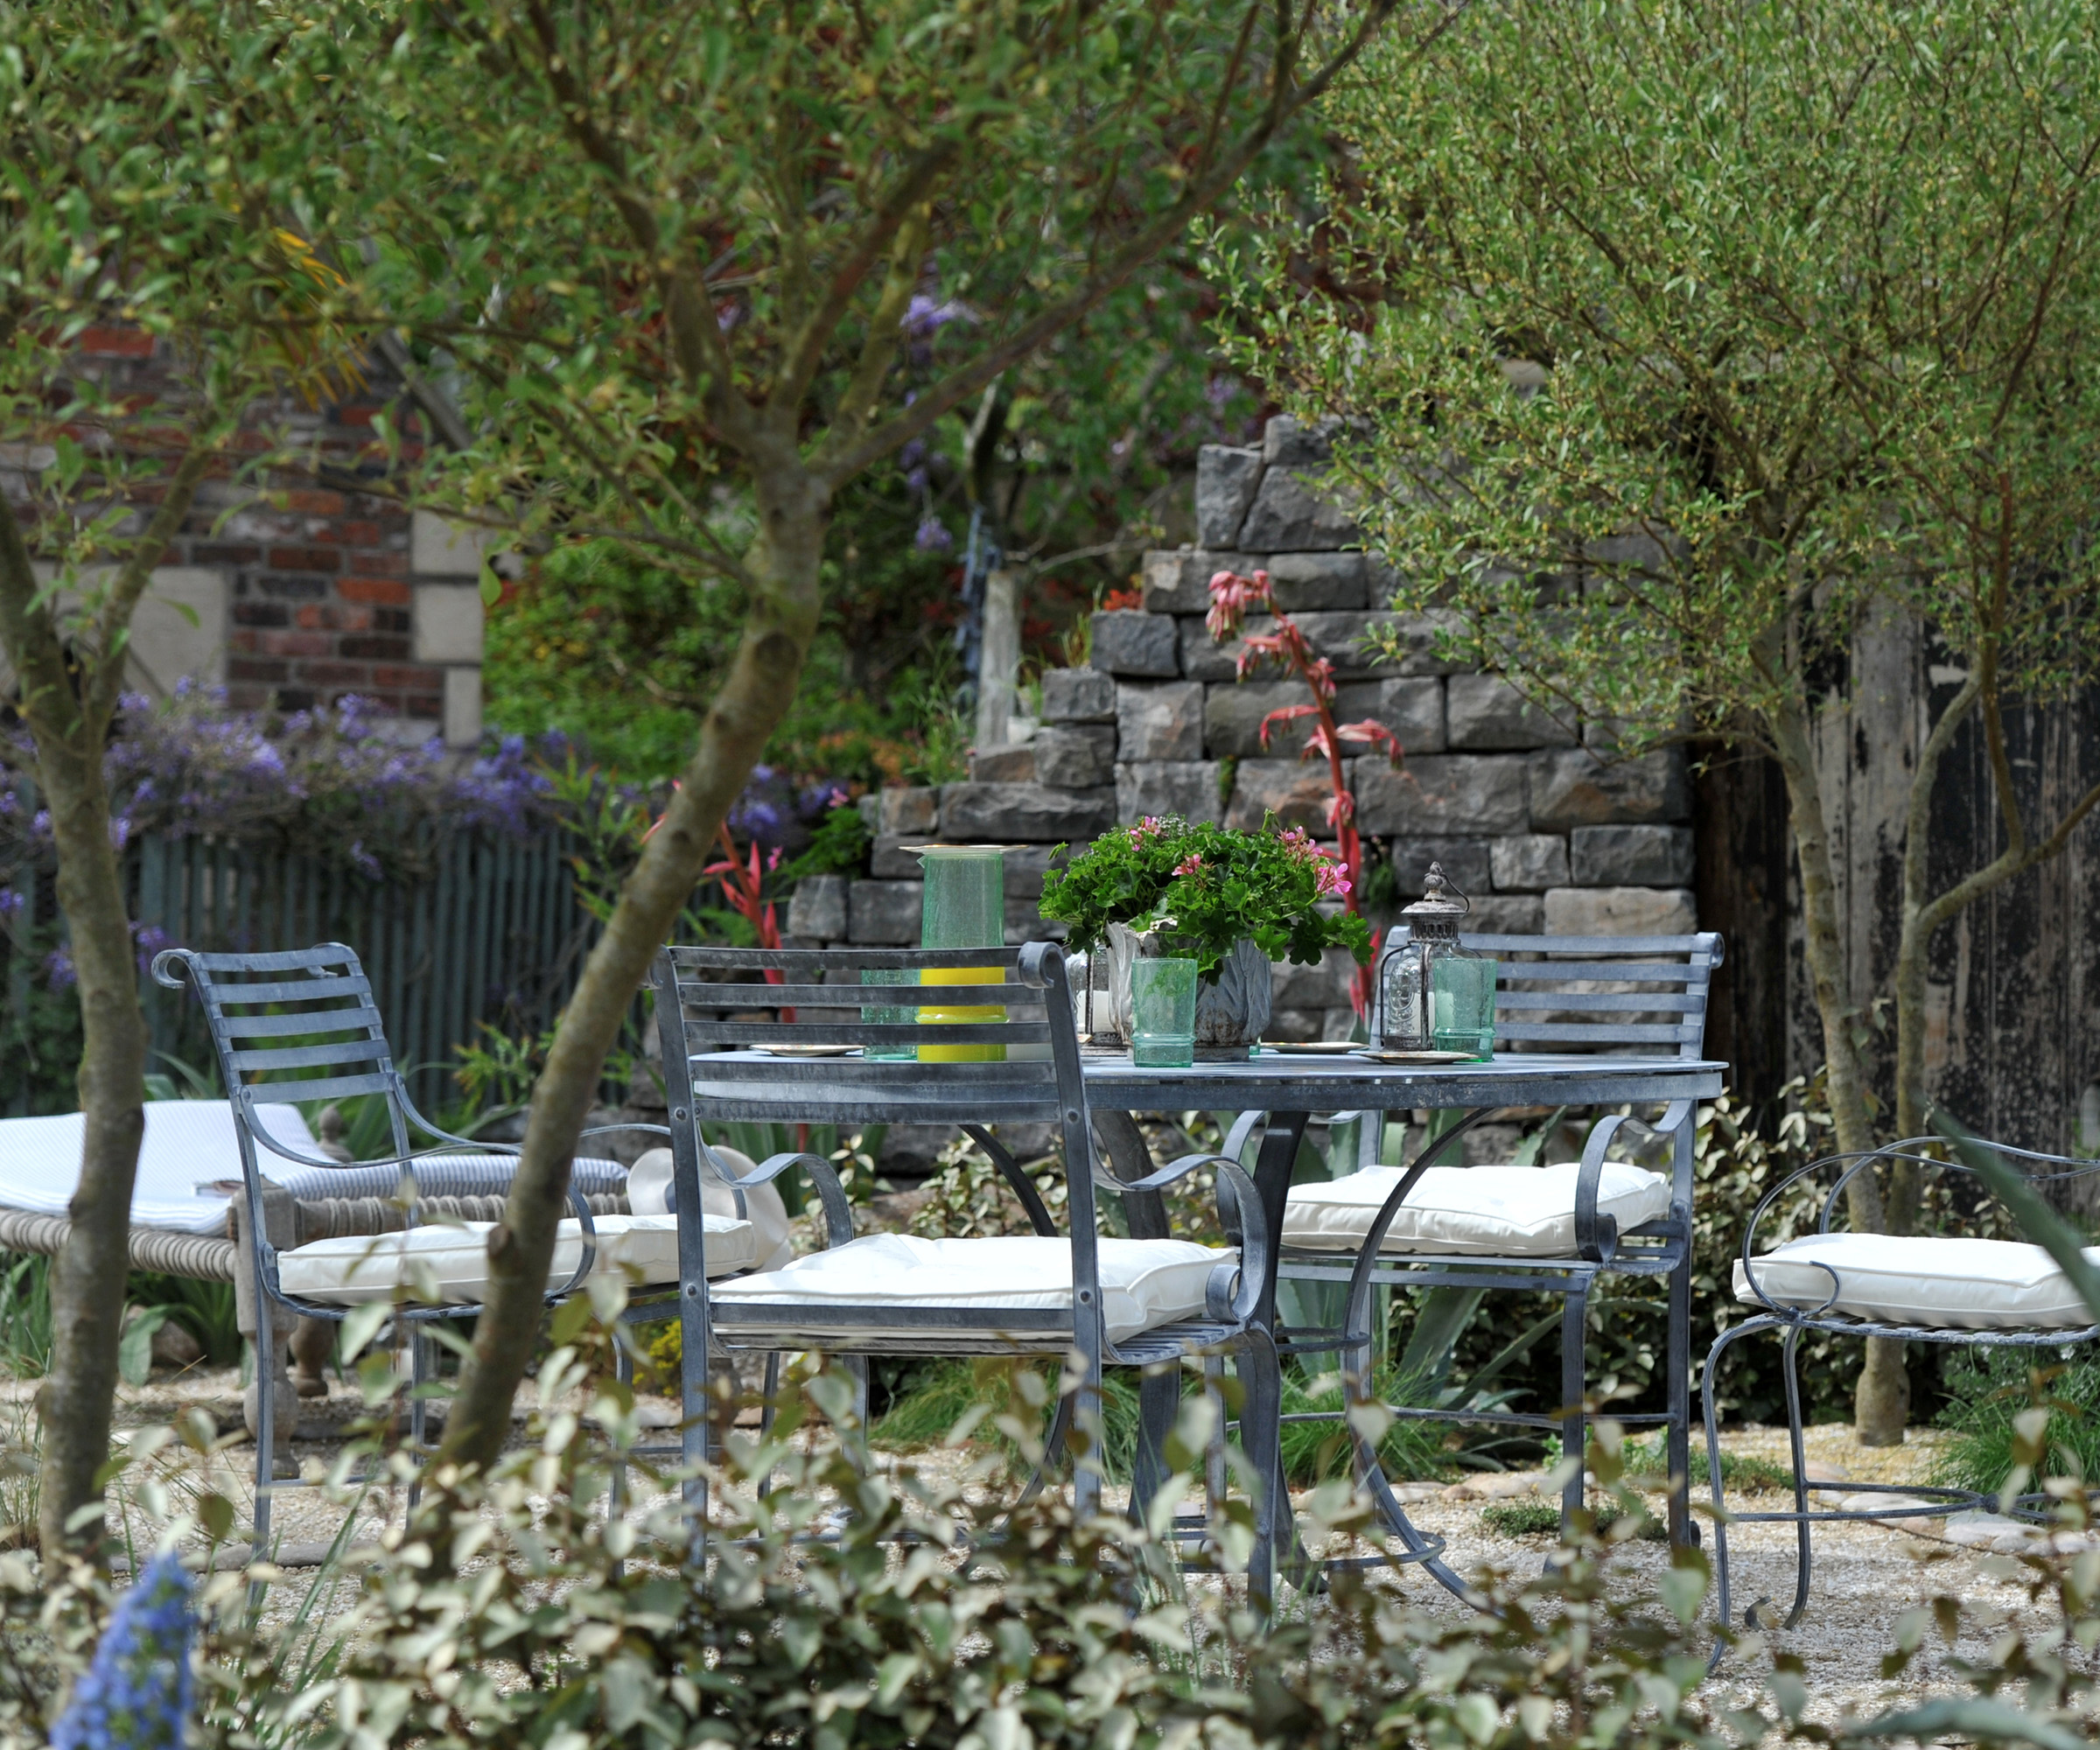 An outdoor seating area in a Mediterranean style garden